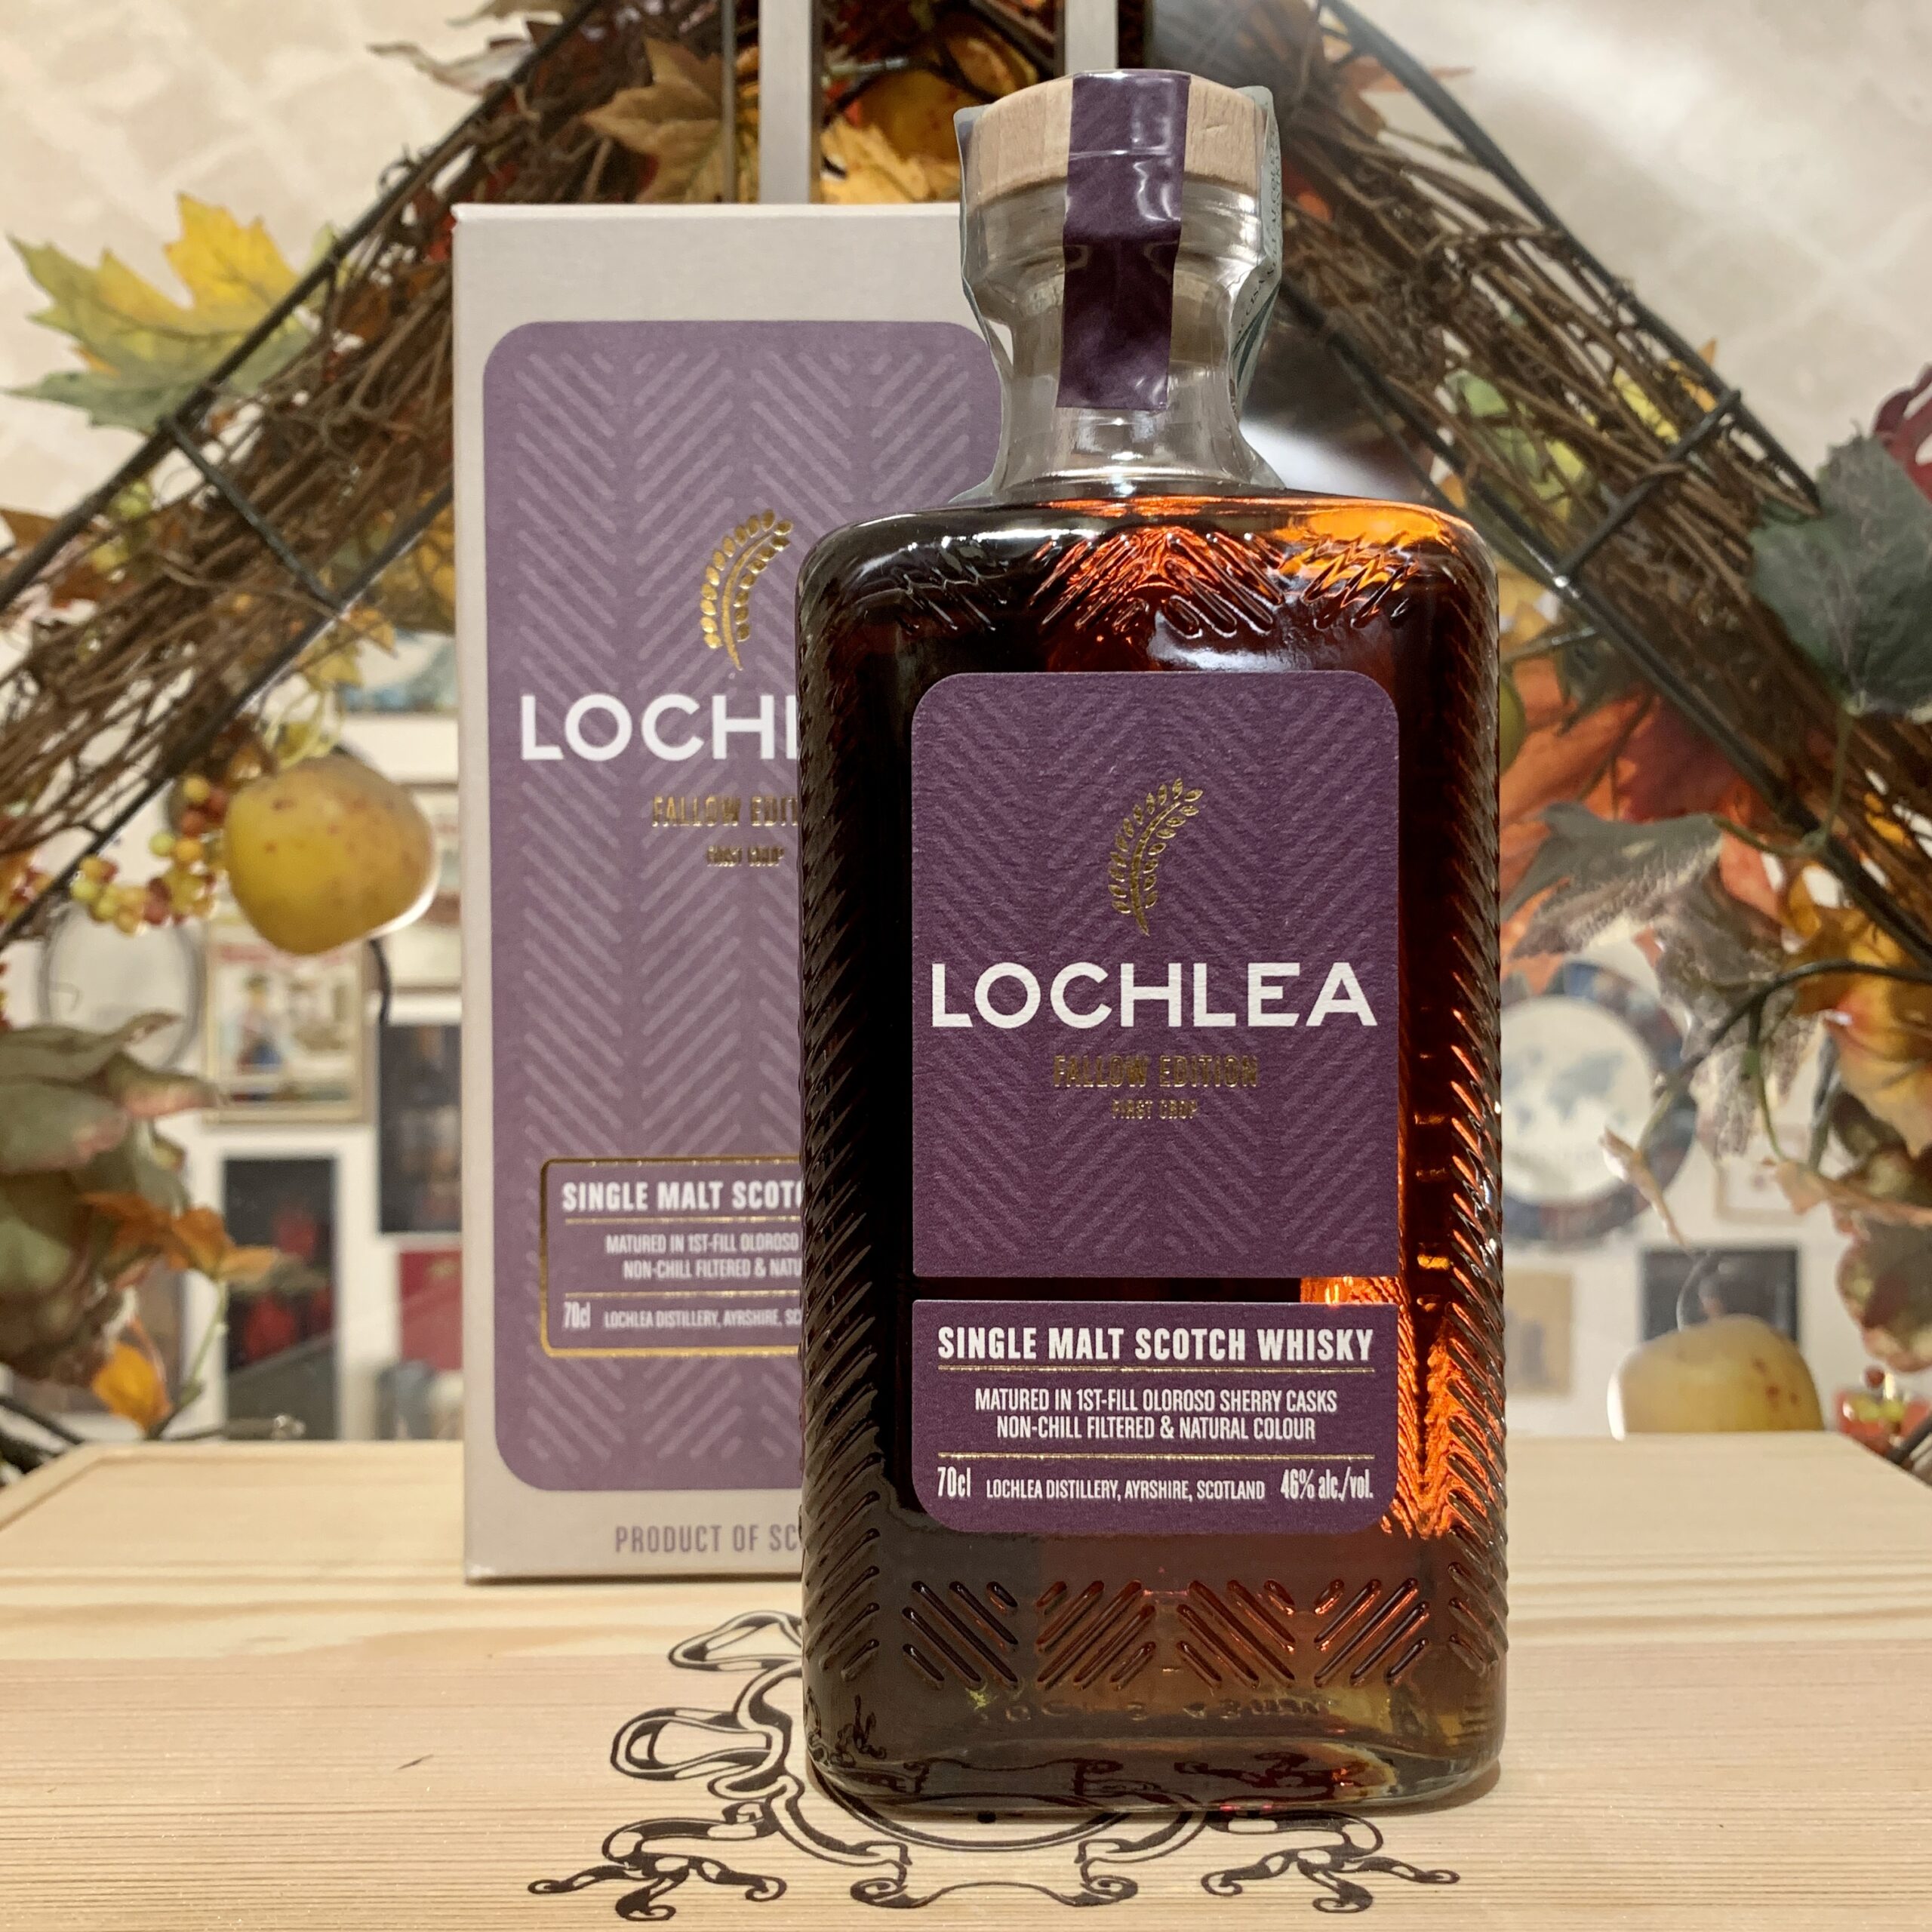 Lochlea “Fallow Edition 1st Crop” Lowlands Single Malt Scotch Whisky